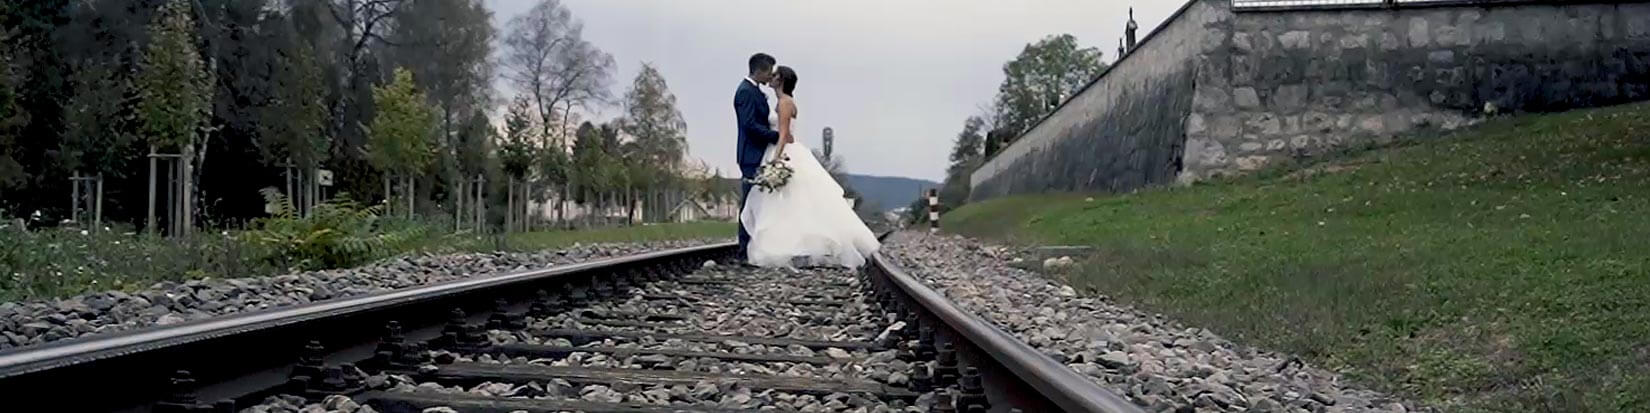 wedding videography editing